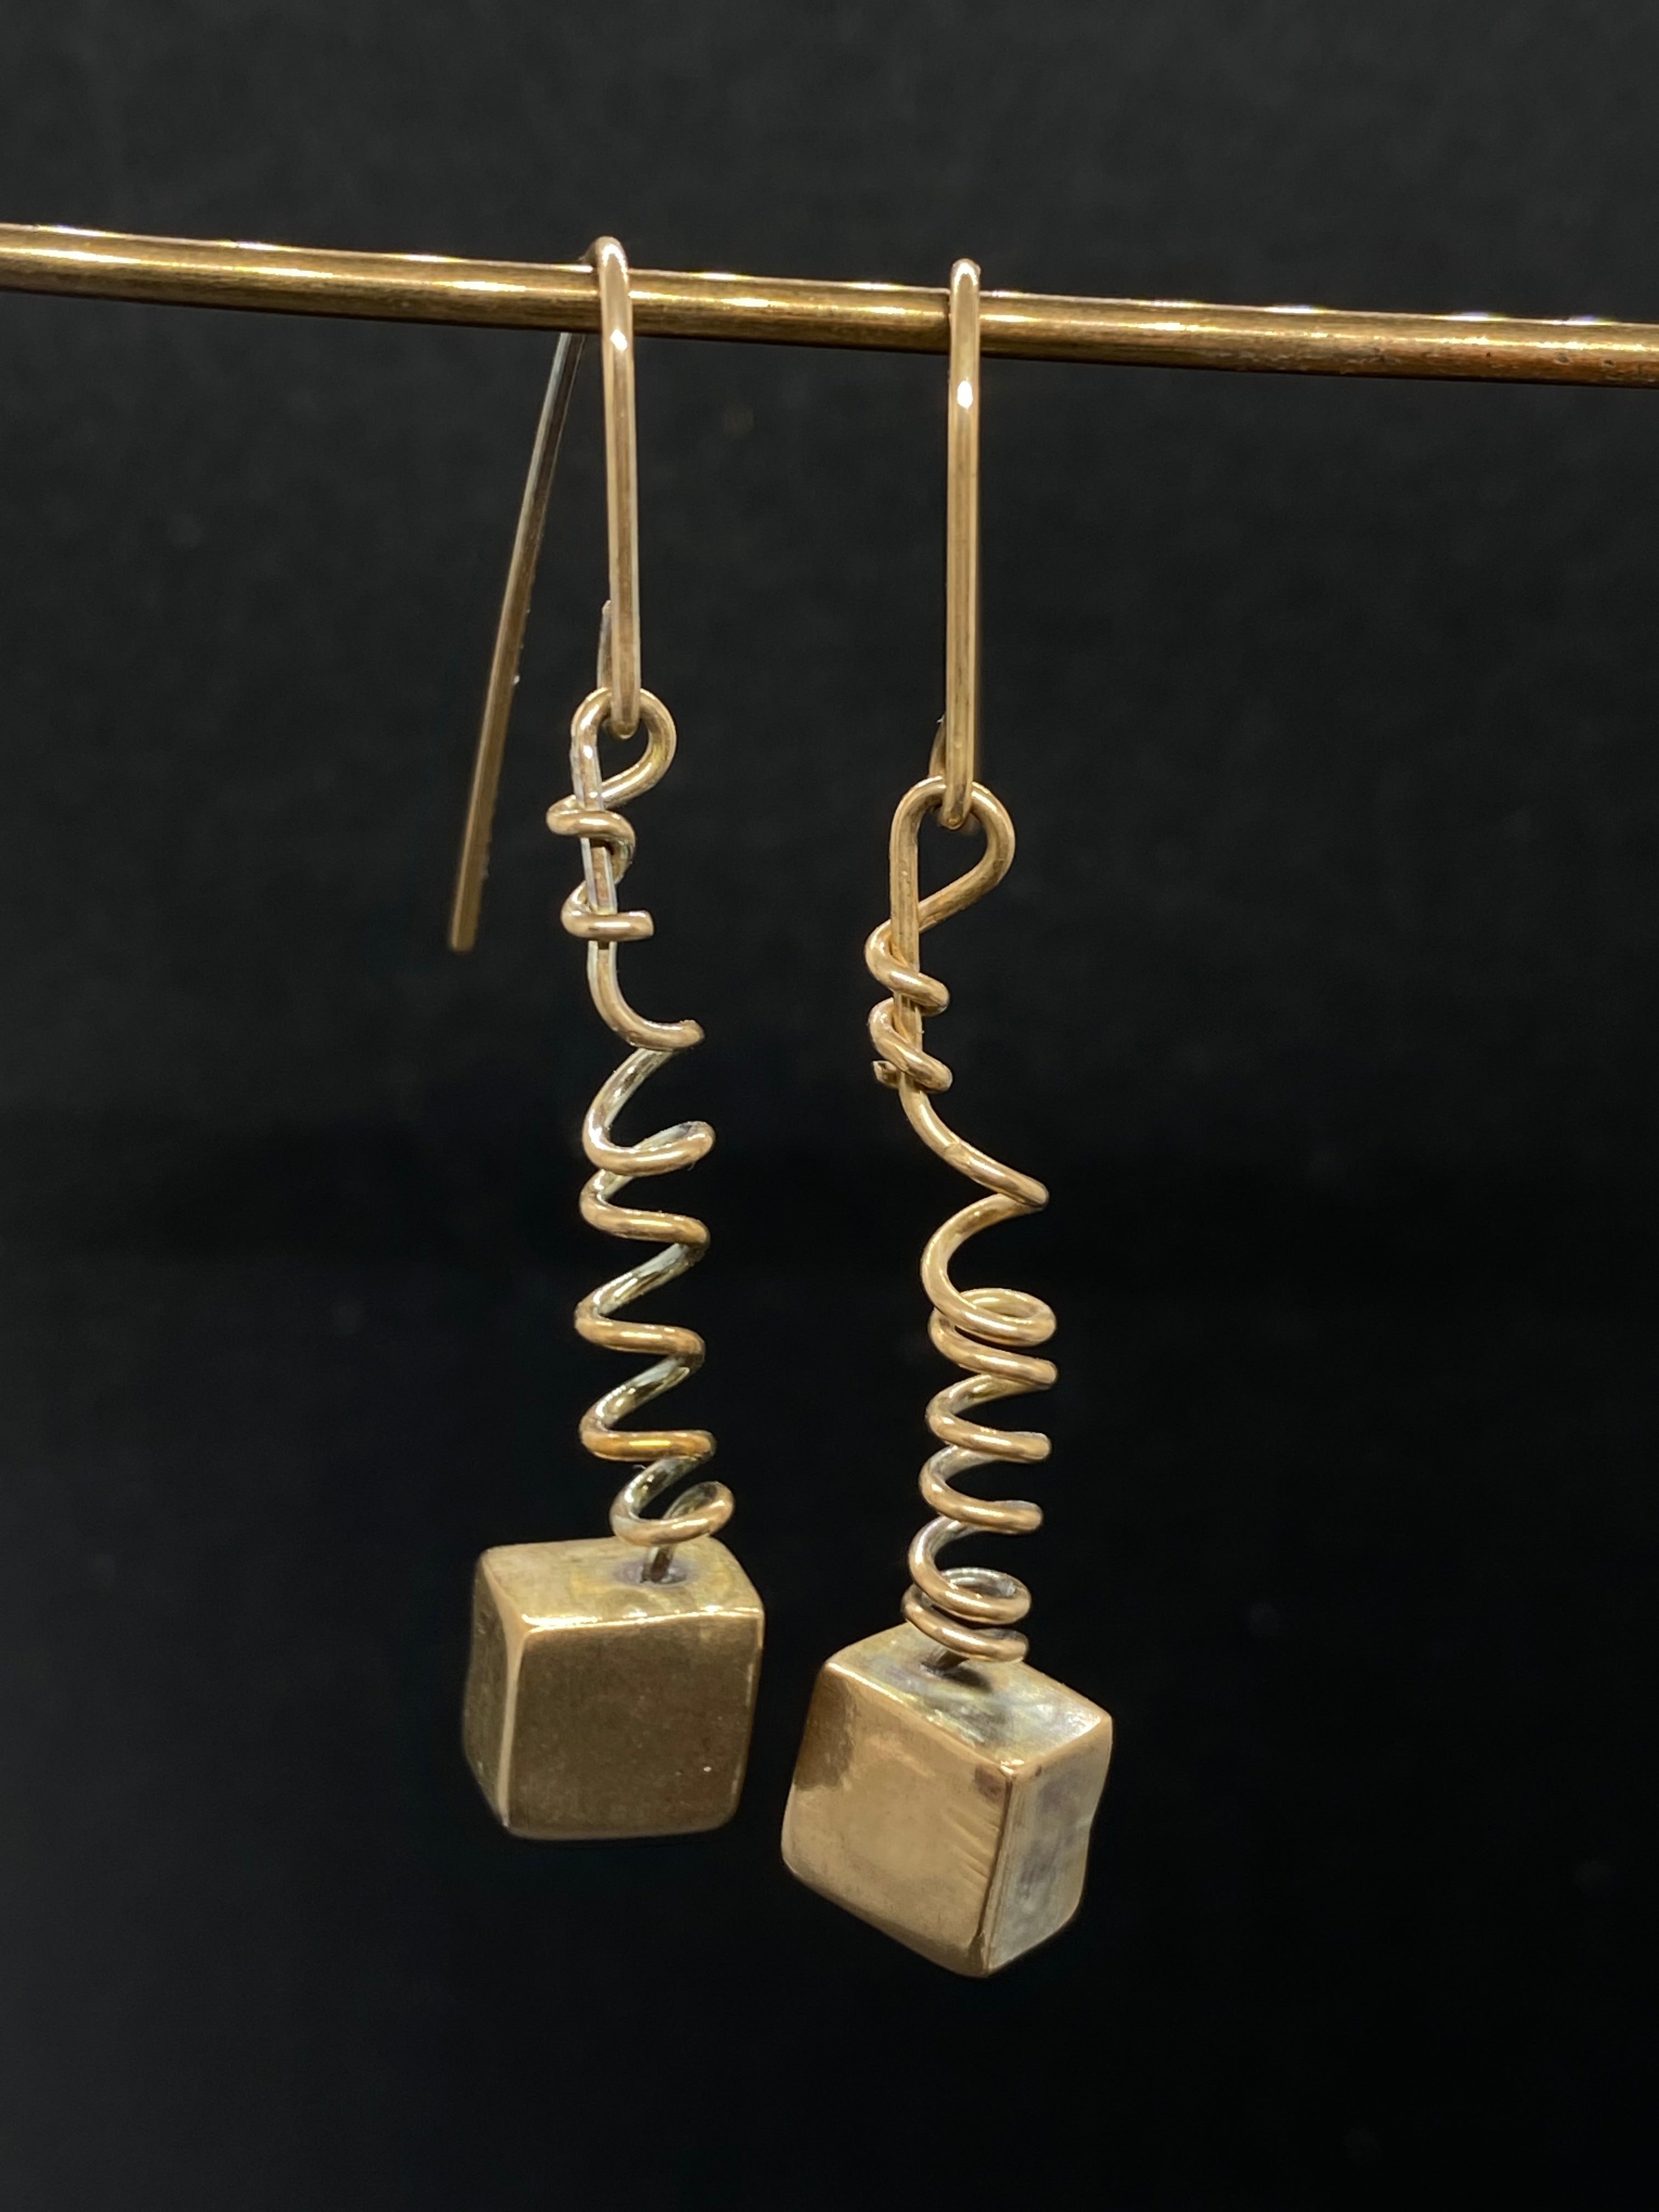 Spring earrings in bronze